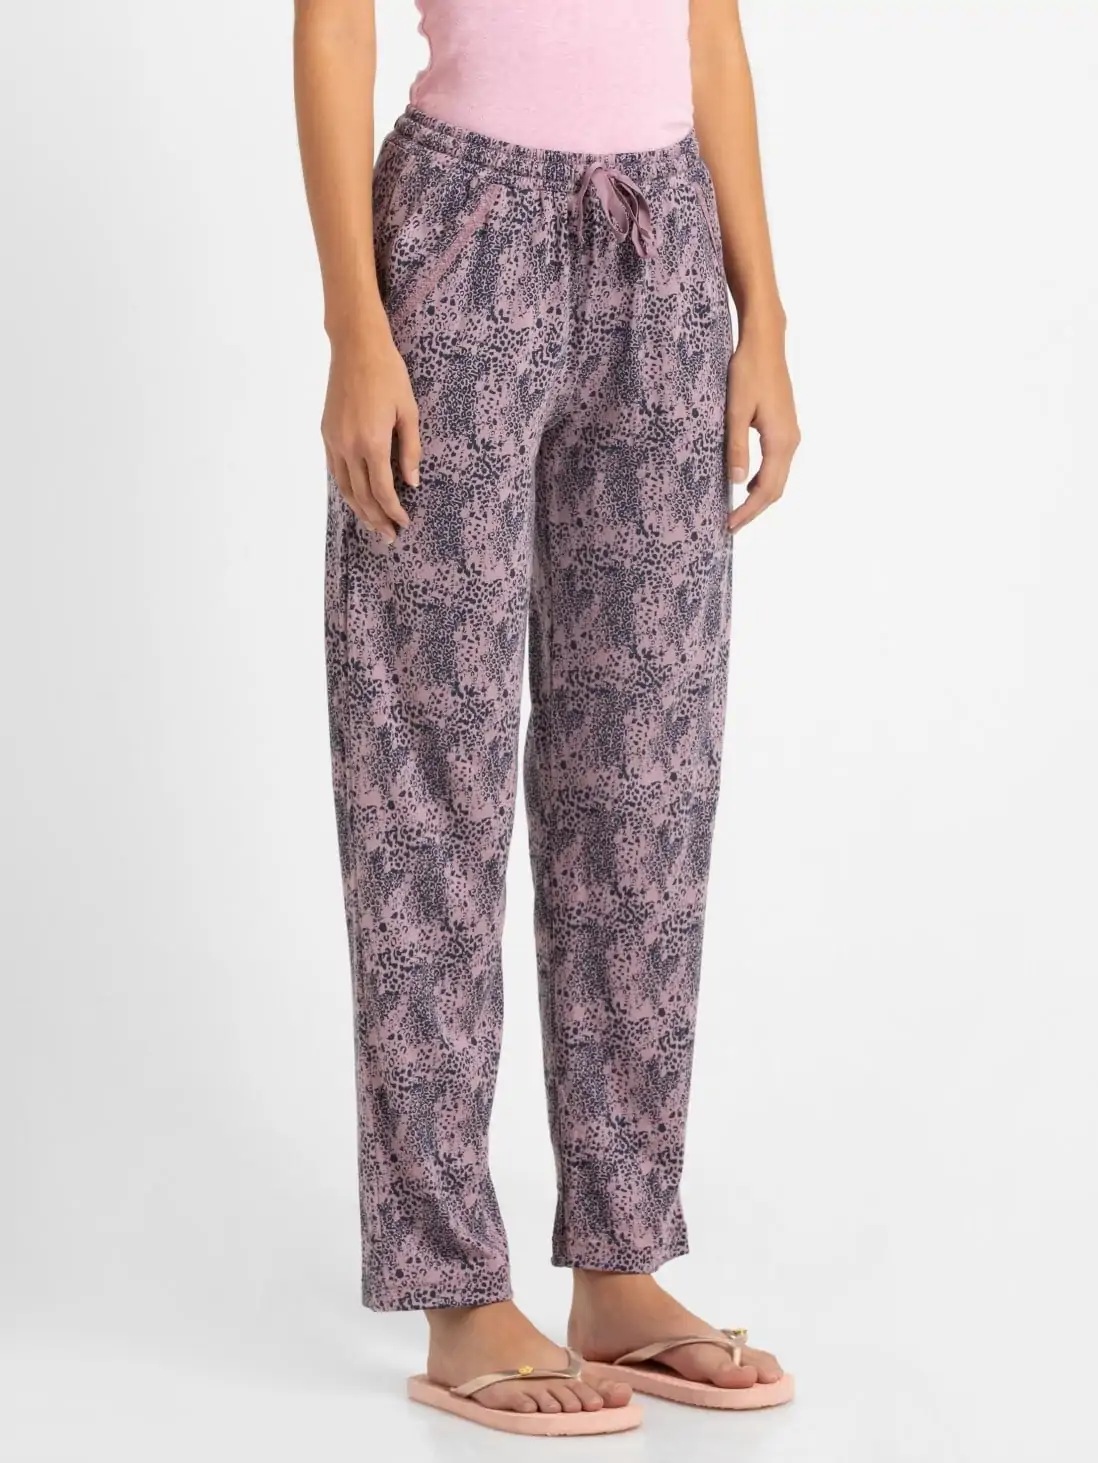 Brilliant Basics Women's Animal Print Flannel Pants - Peacoat - Size 16 |  BIG W